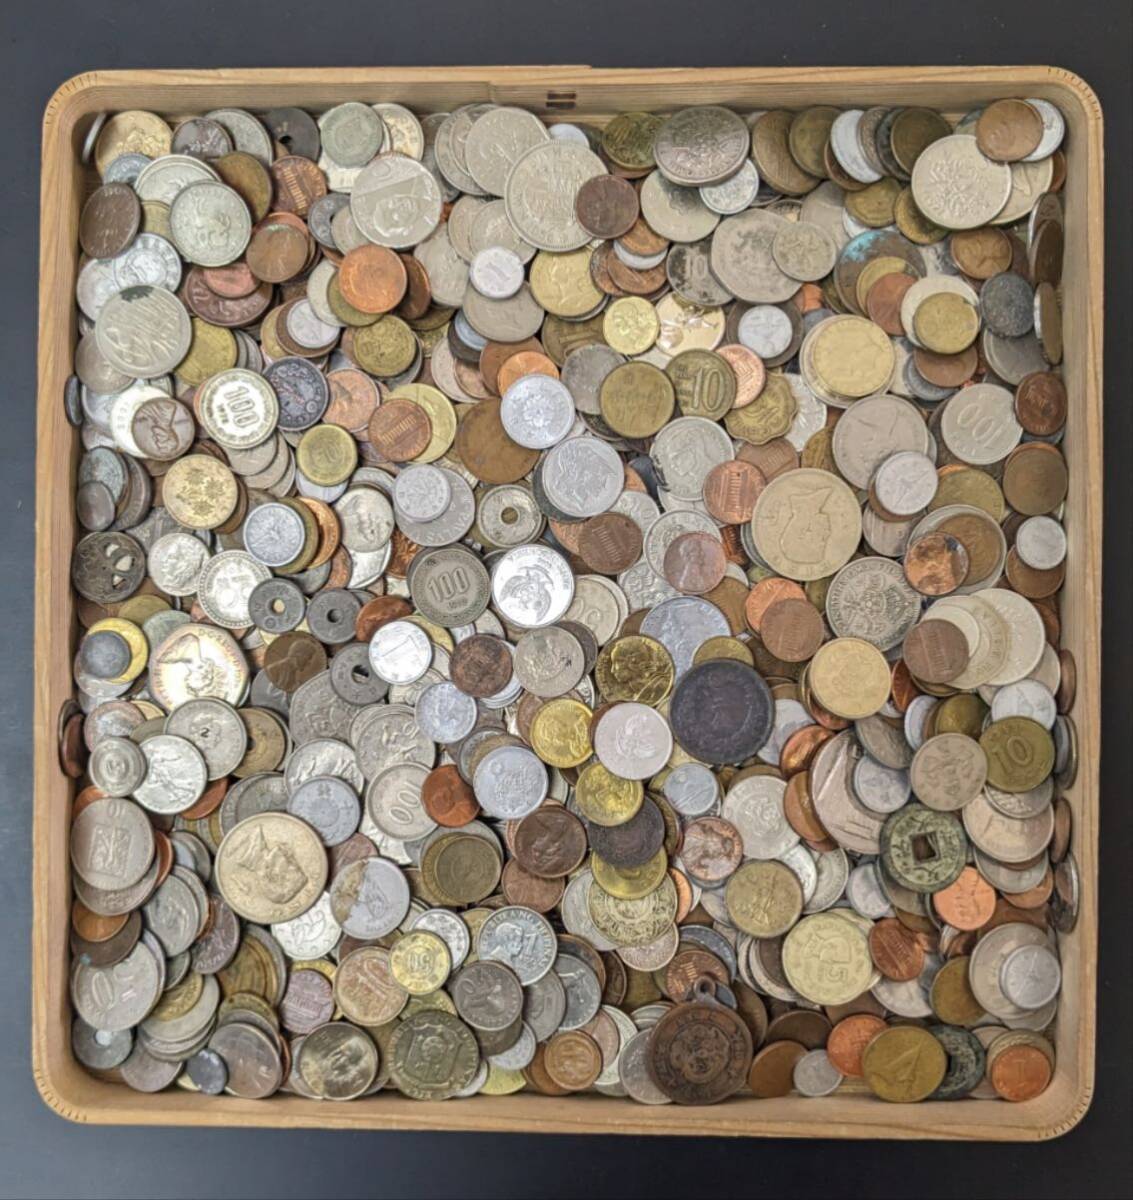 S4247 古美術 古銭 硬貨 硬幣 貨幣 外国銭 世界コイン 大量まとめ 総重量約4.26kg アンティークの画像1